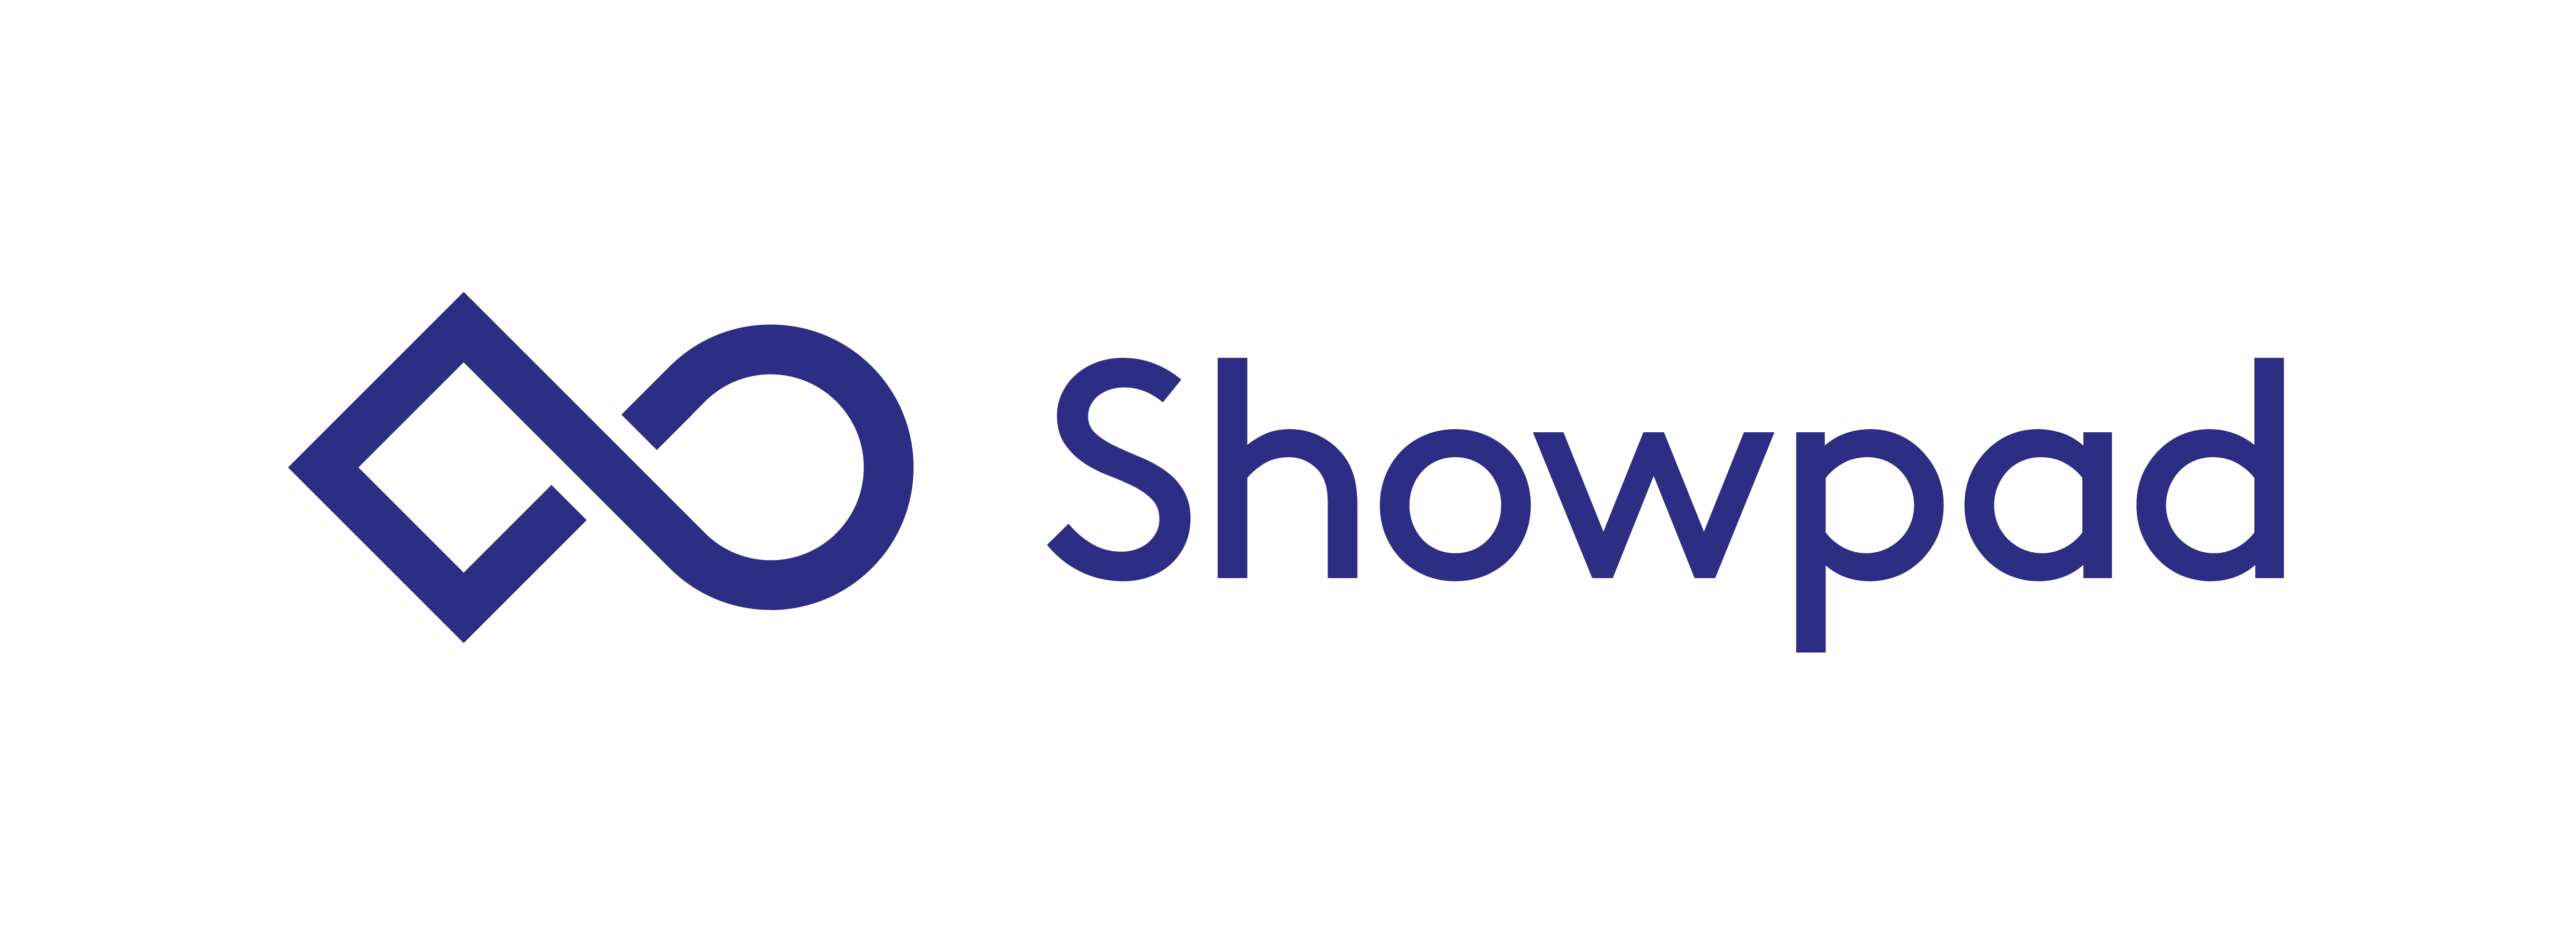 Showpad-logo-vertical-blue